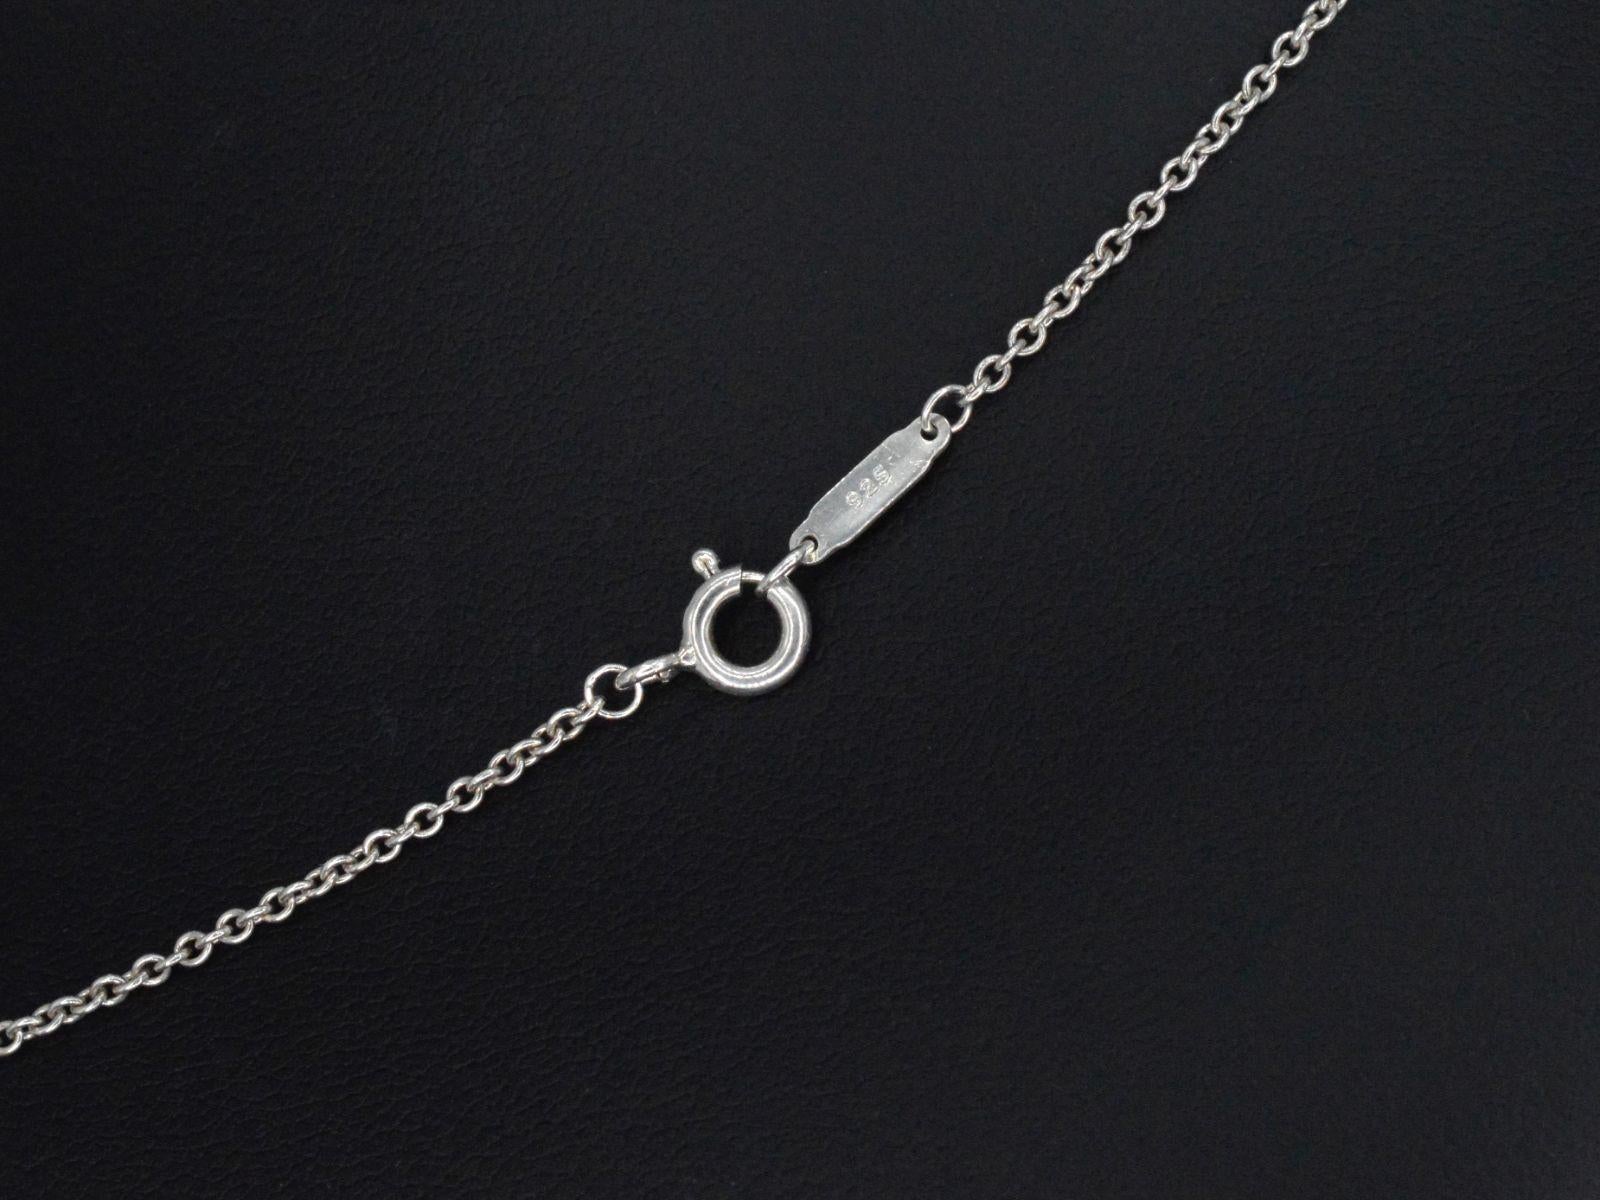 tiffany interlocking circles necklace